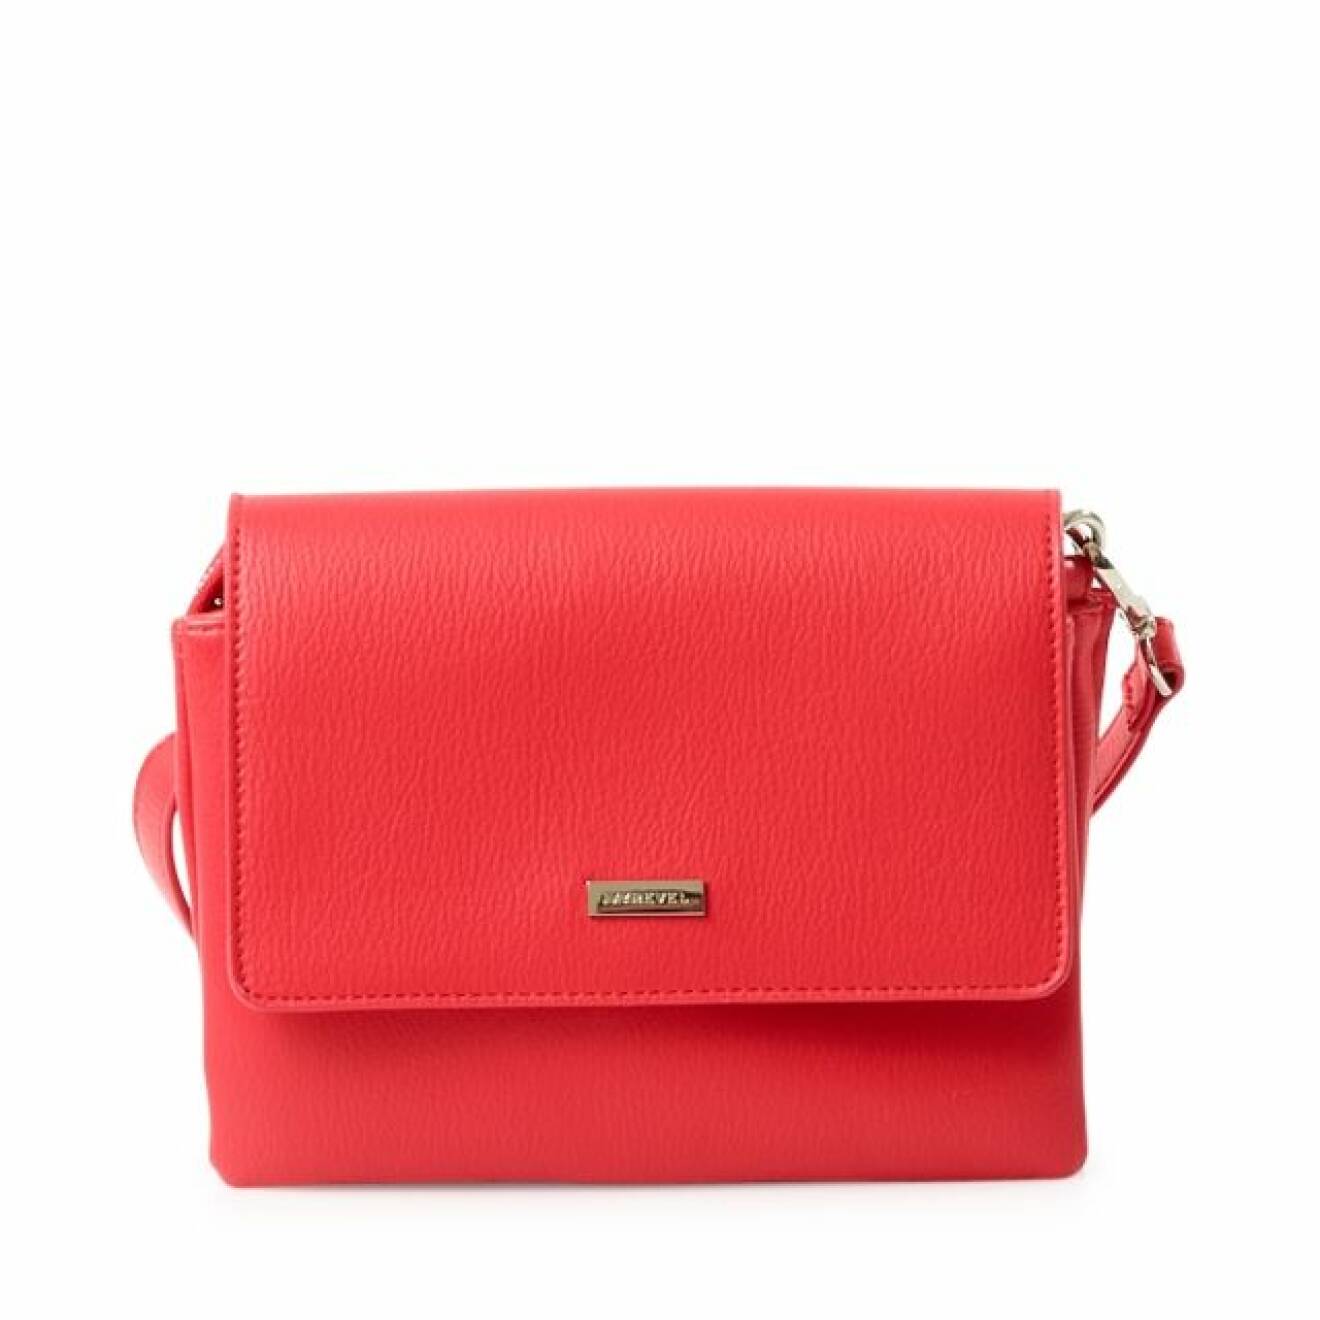 Röd liten handväska Kenza Zouiten